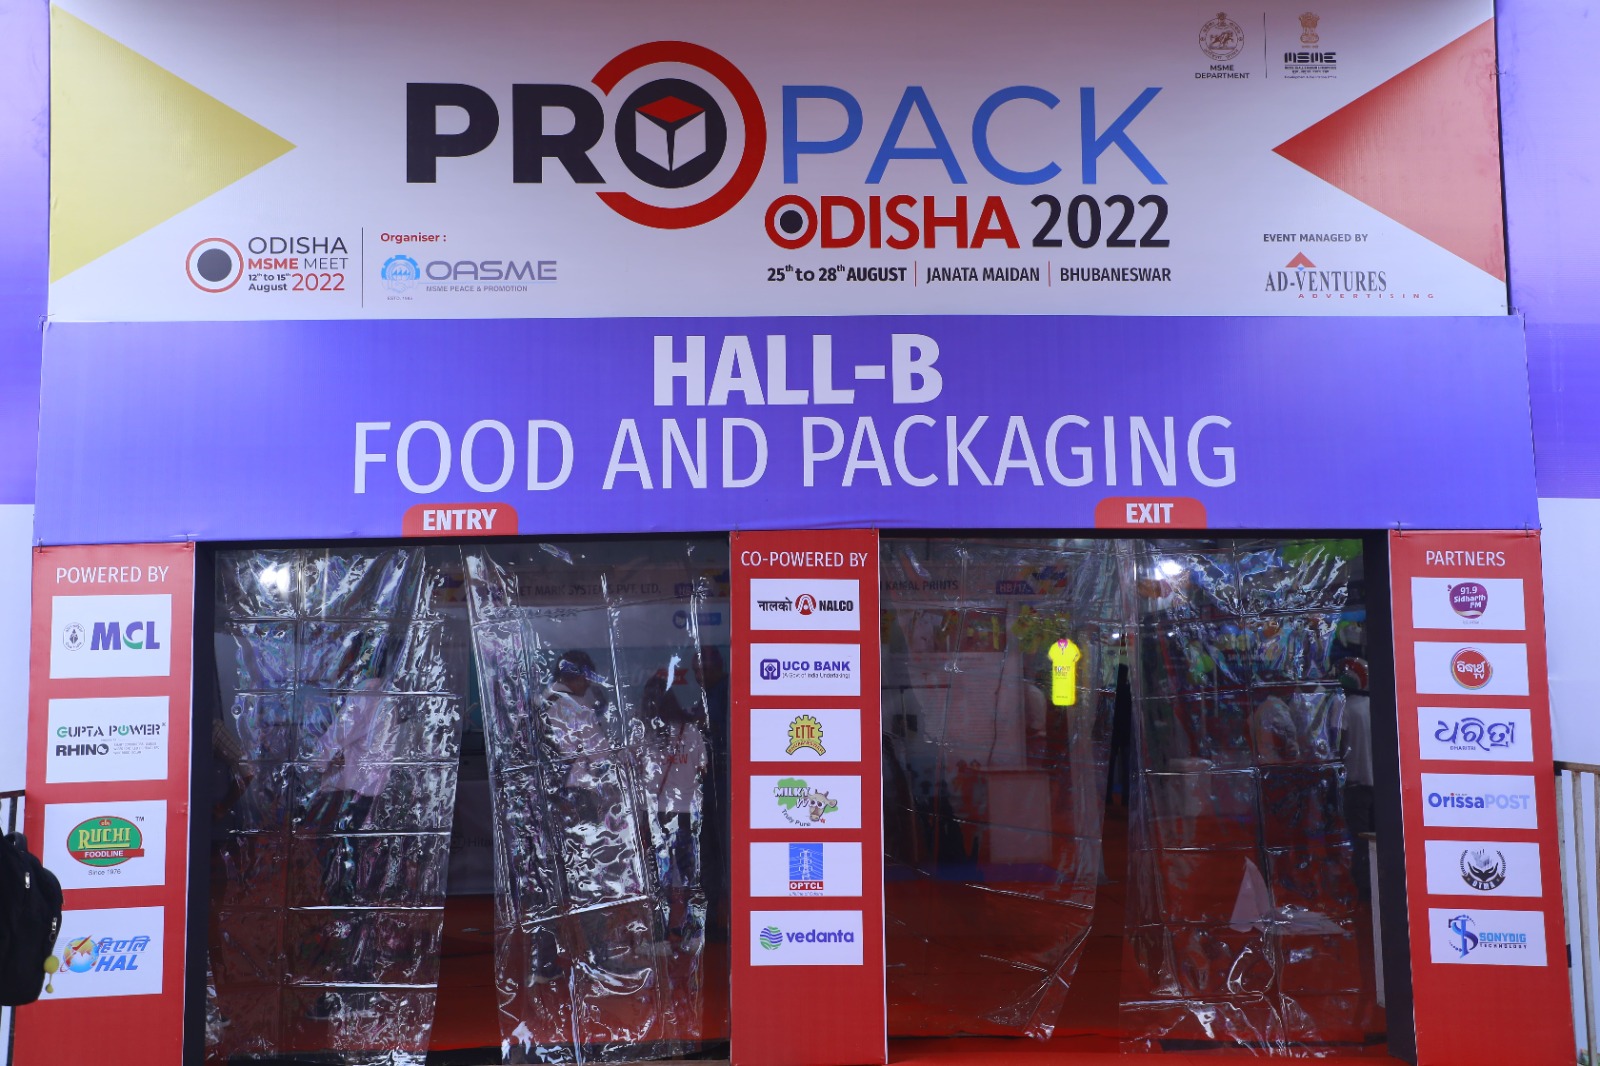 Why exhibit Propack Odisha?